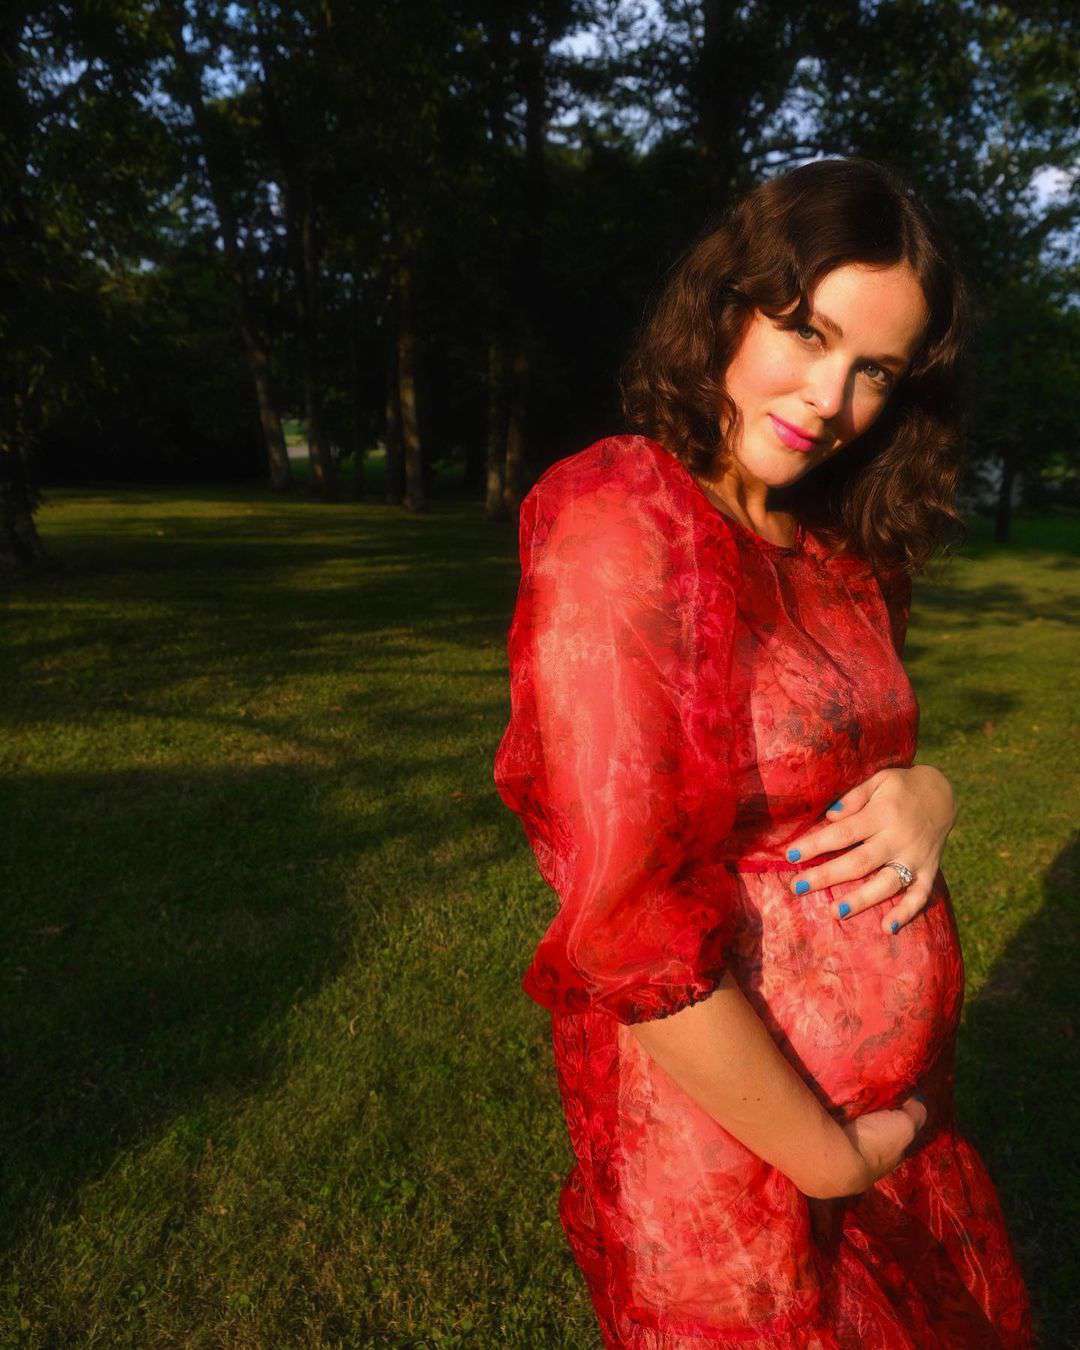 A cantora country Jillian Jacqueline espera o primeiro bebê com o marido Bryan Brown